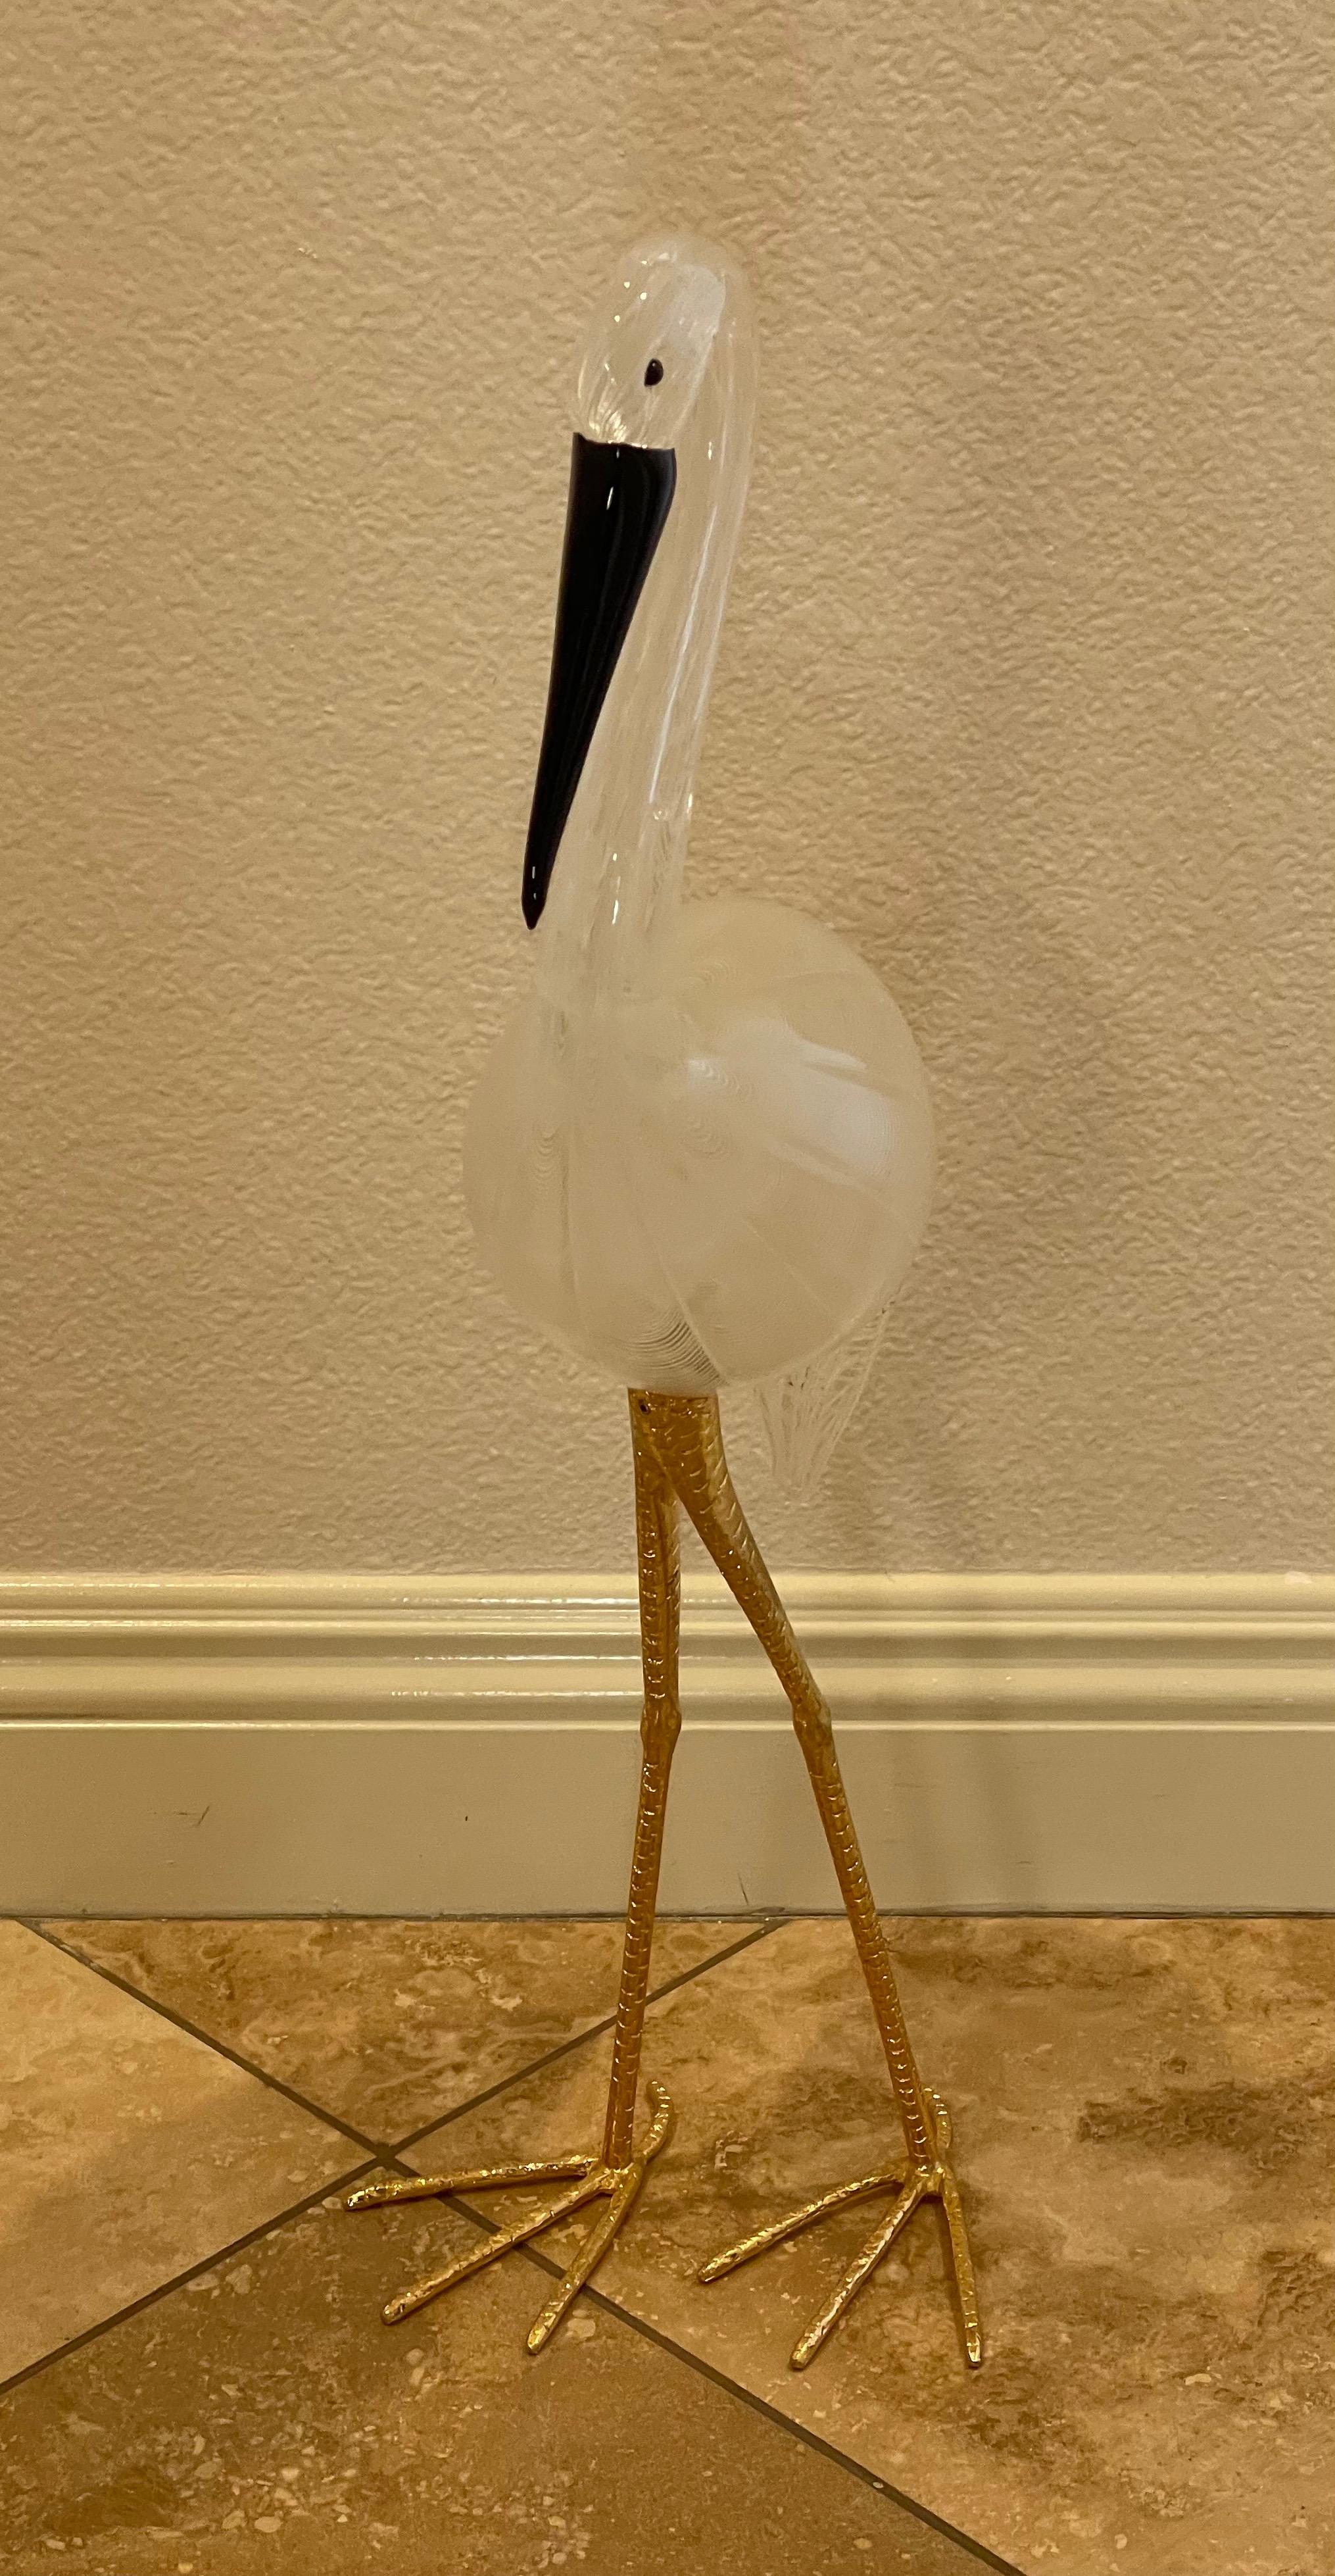 Pair of Large Art Glass Cranes by Licio Zanetti for Murano Glass Studios For Sale 1